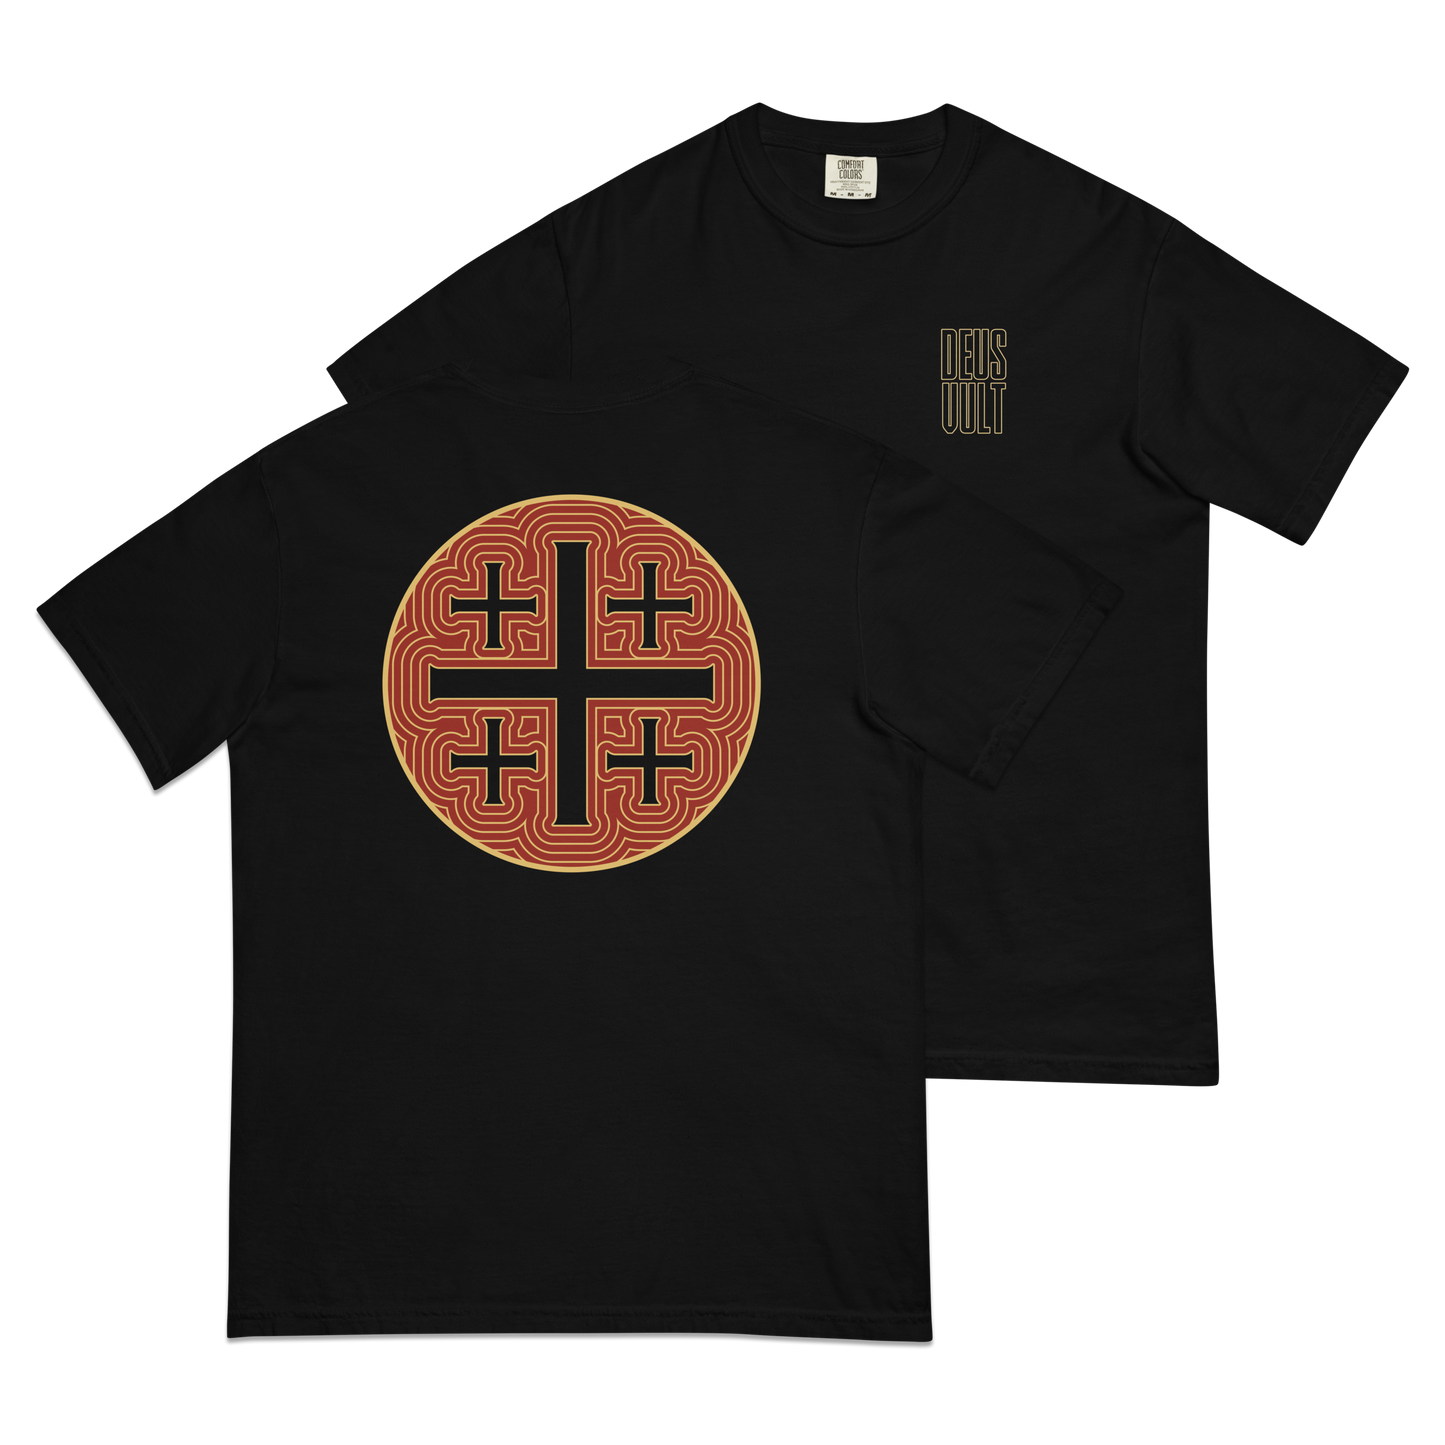 Deus Vult T-Shirt (Comfort Colors)